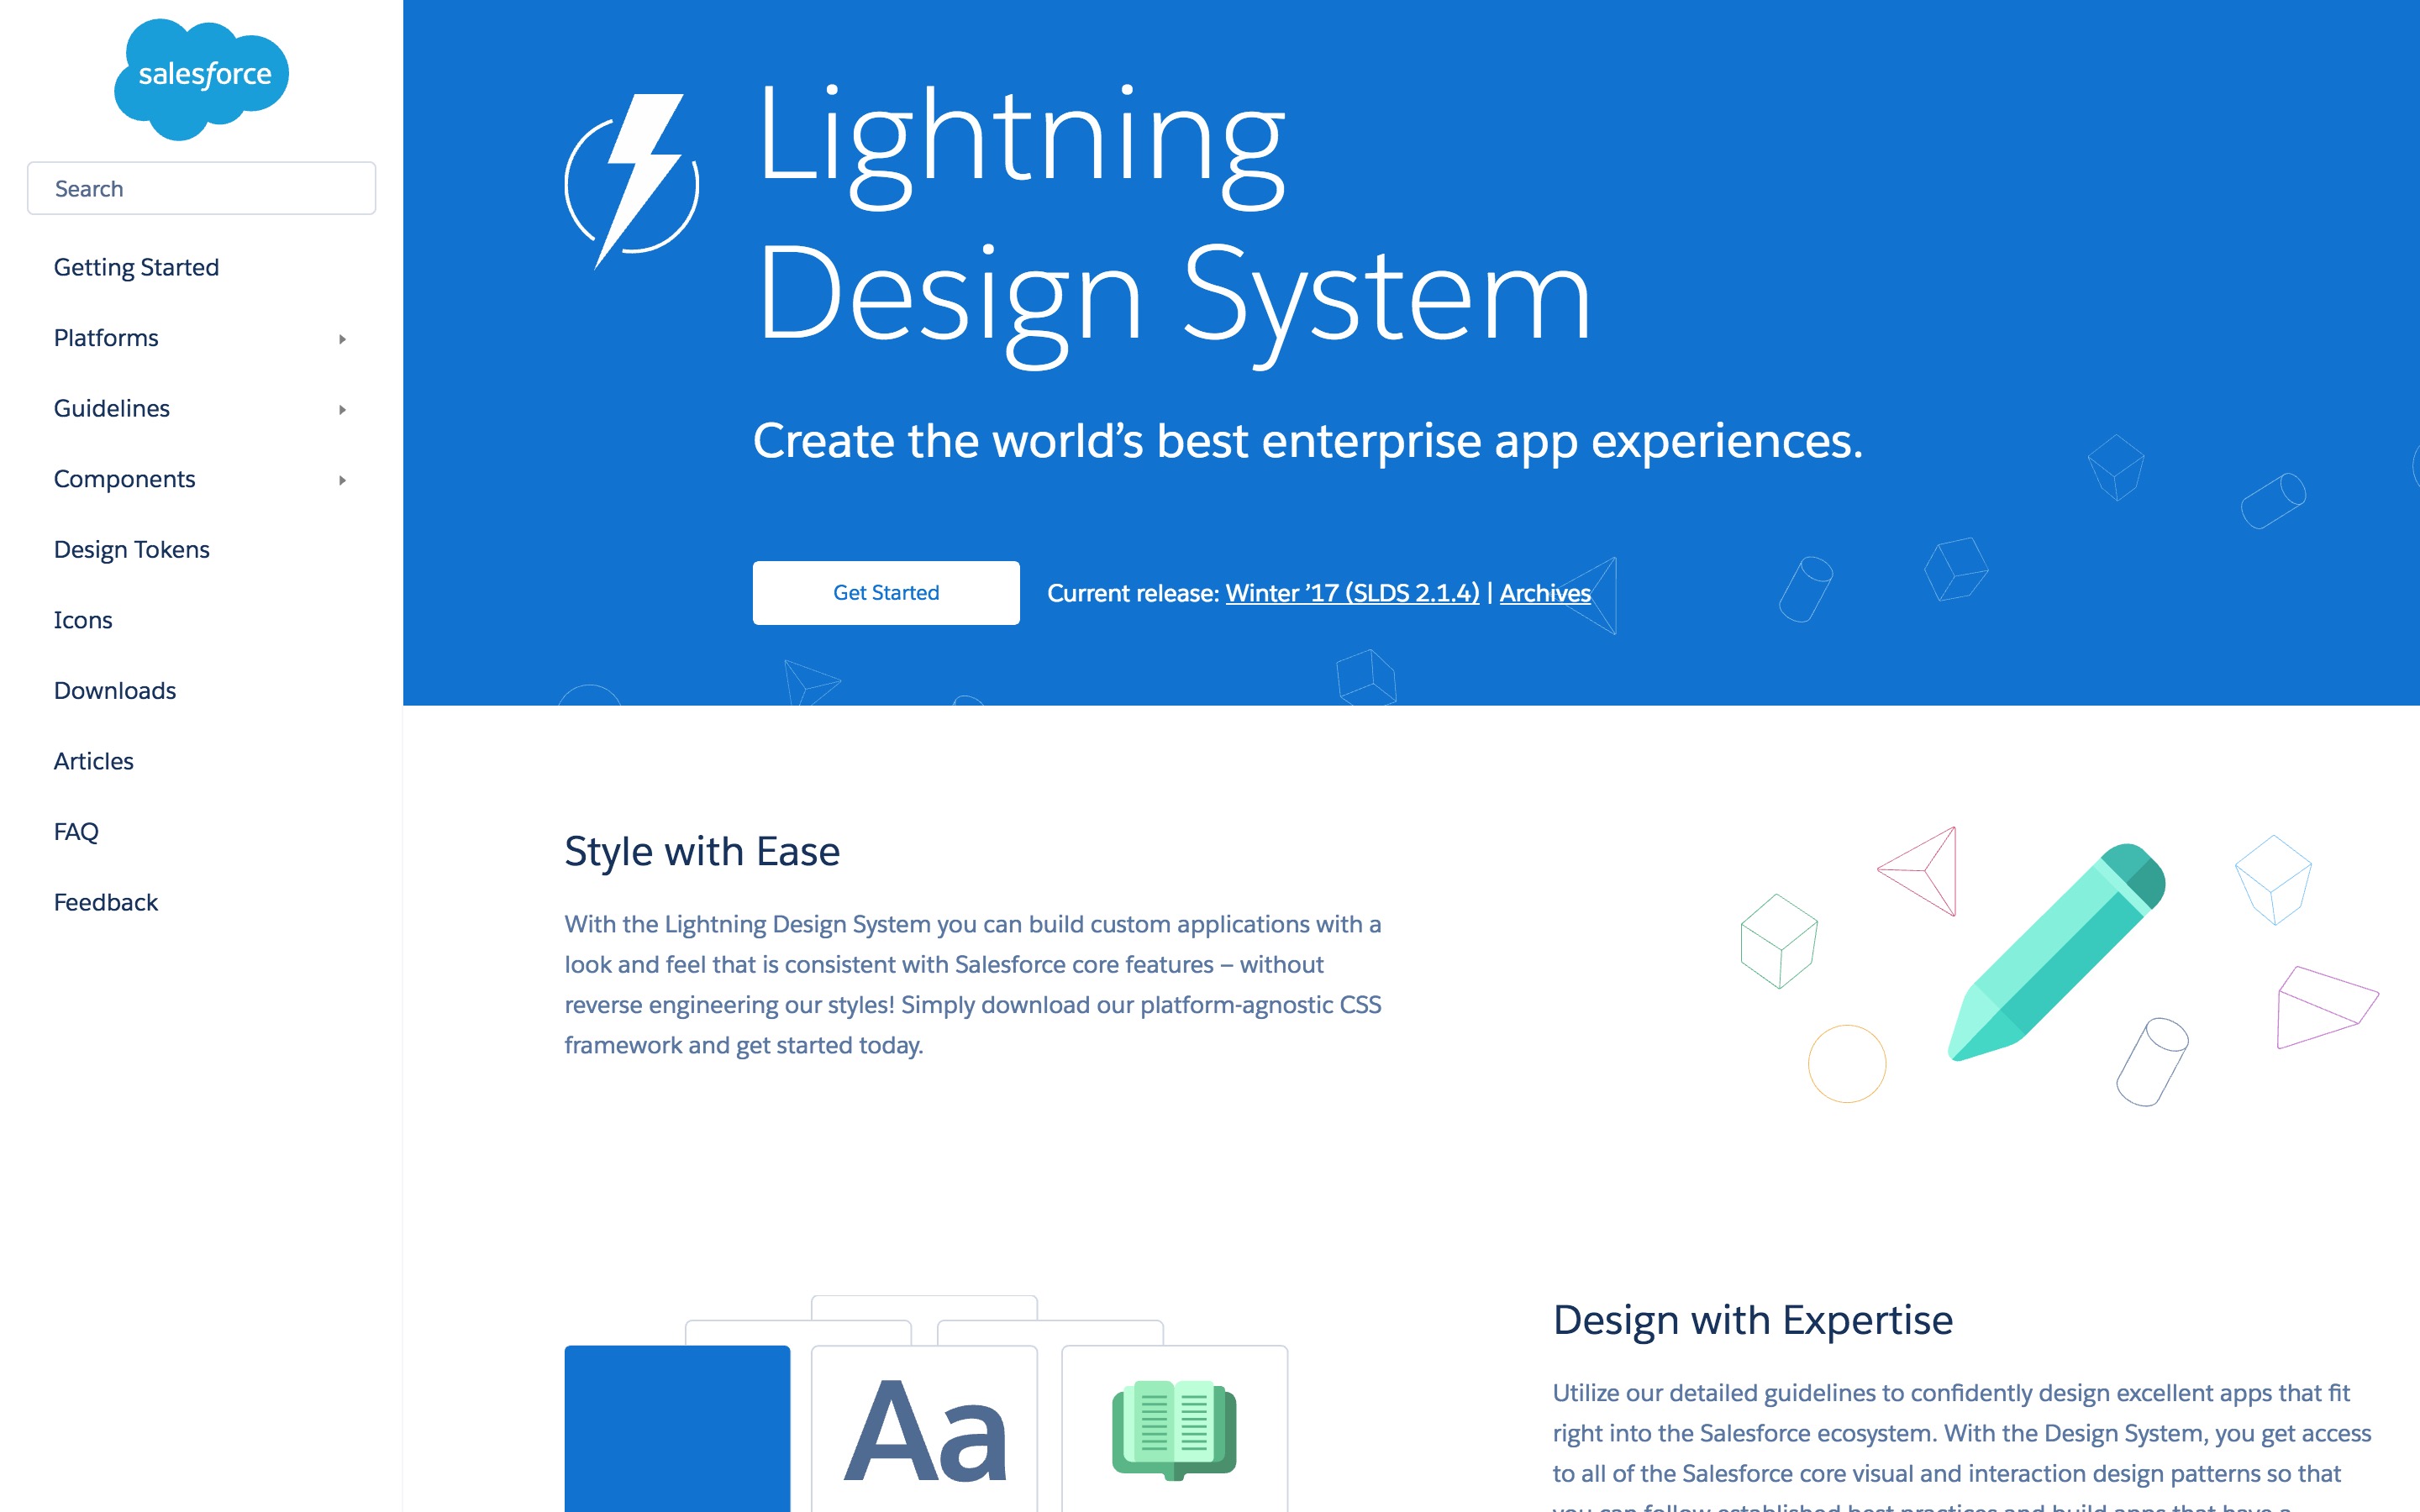 Lightning Design System